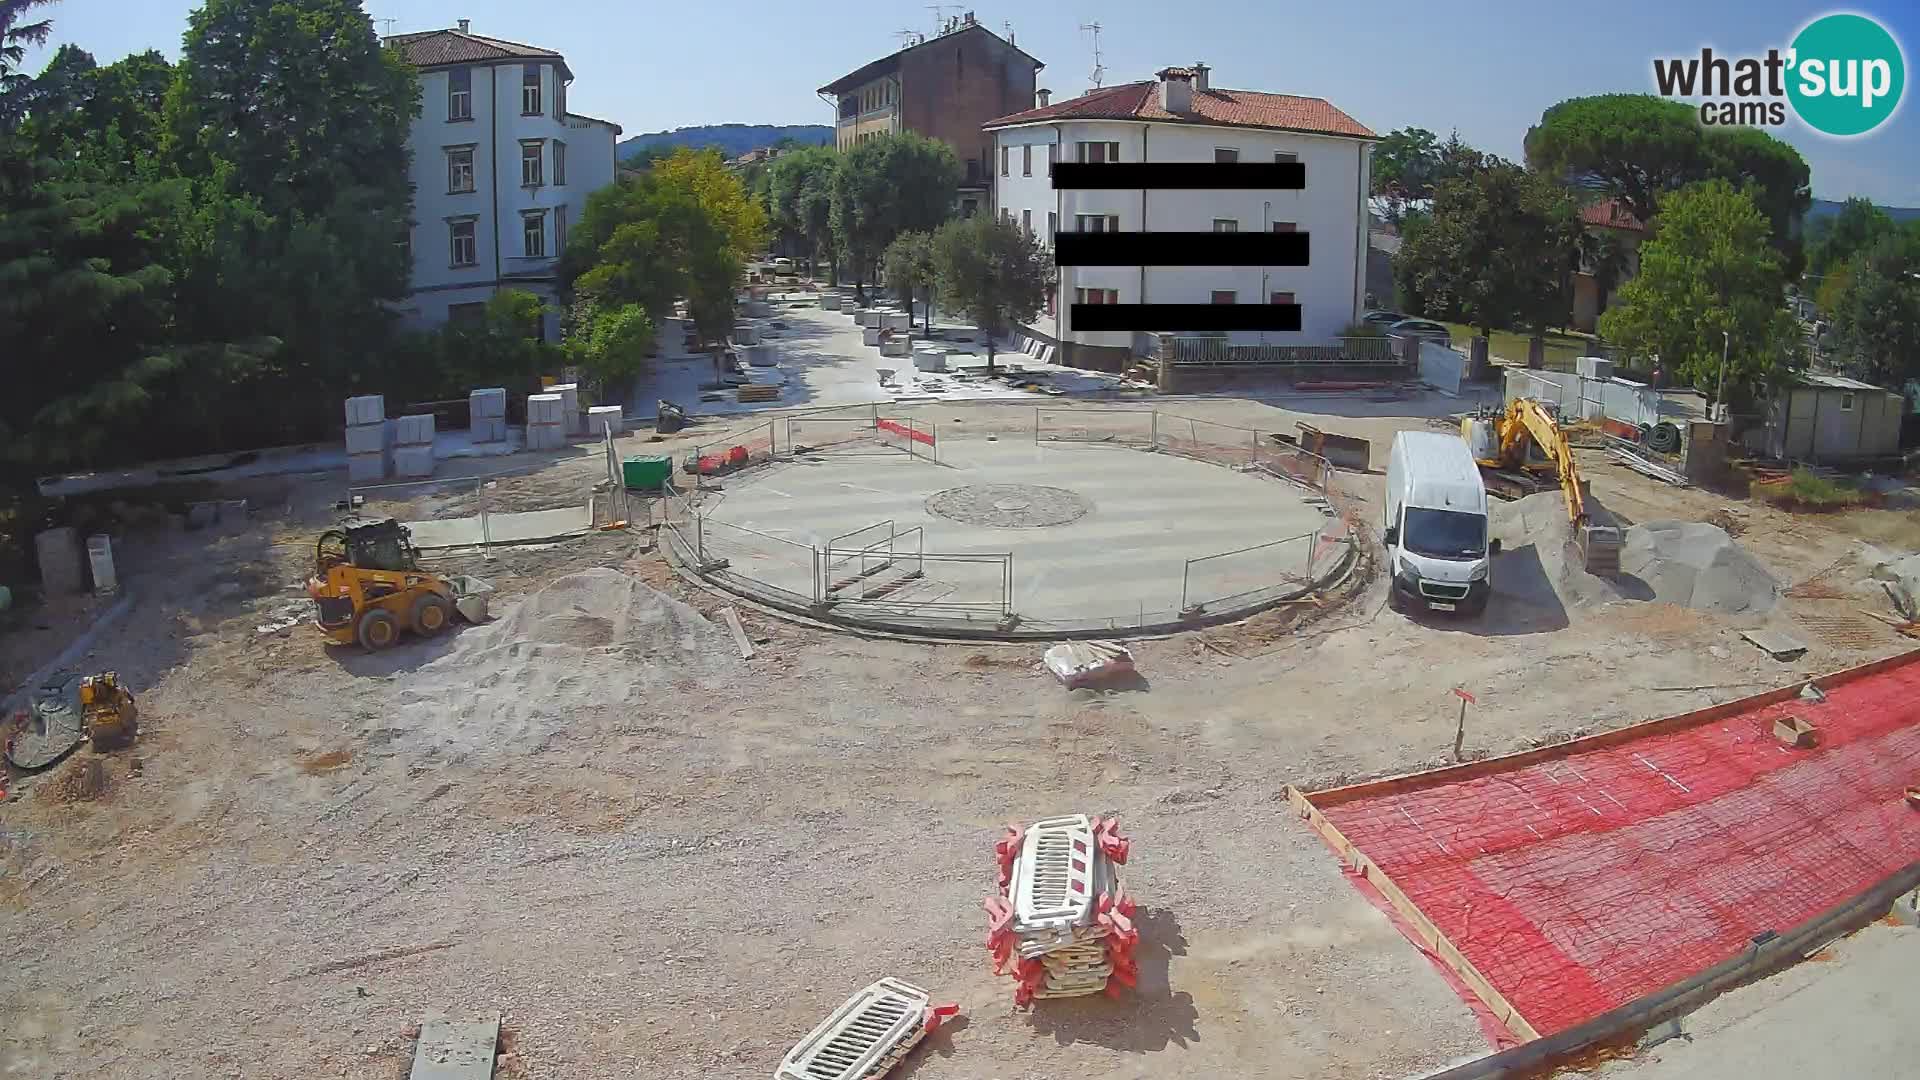 Trg Evrope Nova Gorica / Transalpina Gorica | Gorizia